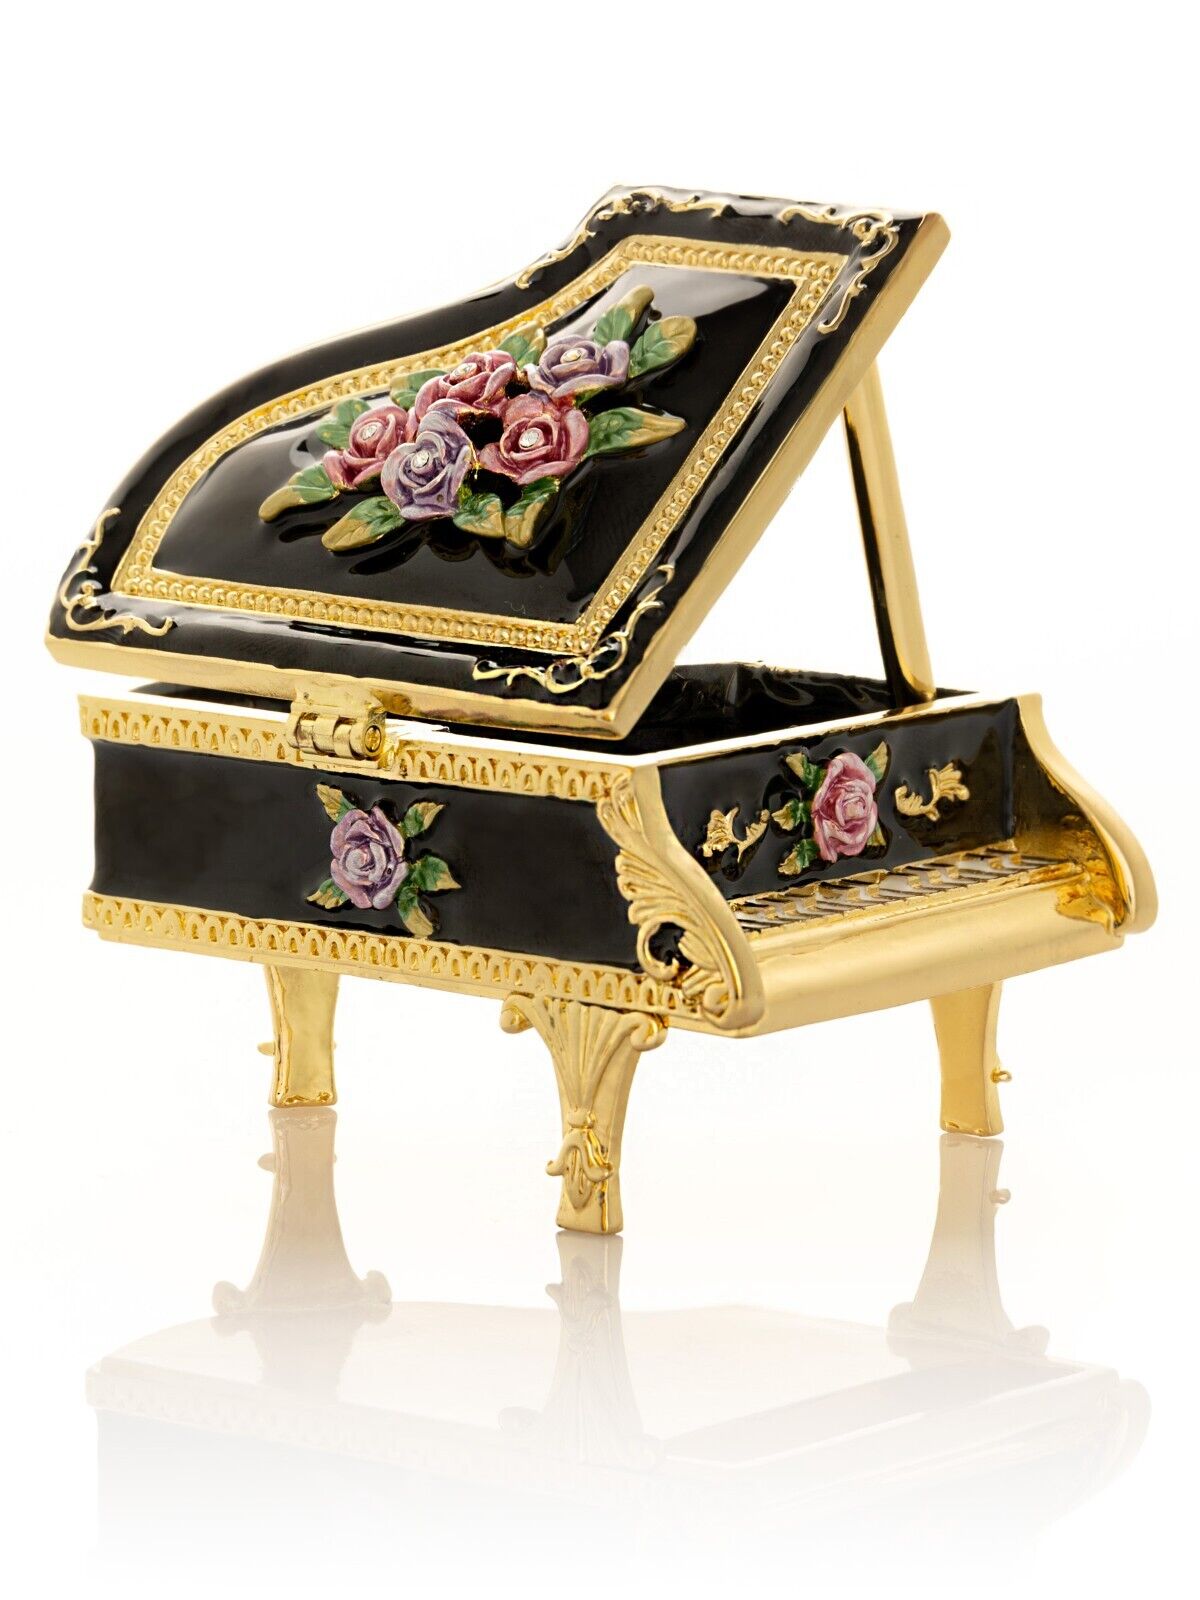 Keren Kopal Black piano with flower Trinket  Box Decorated &Austrian Crystals